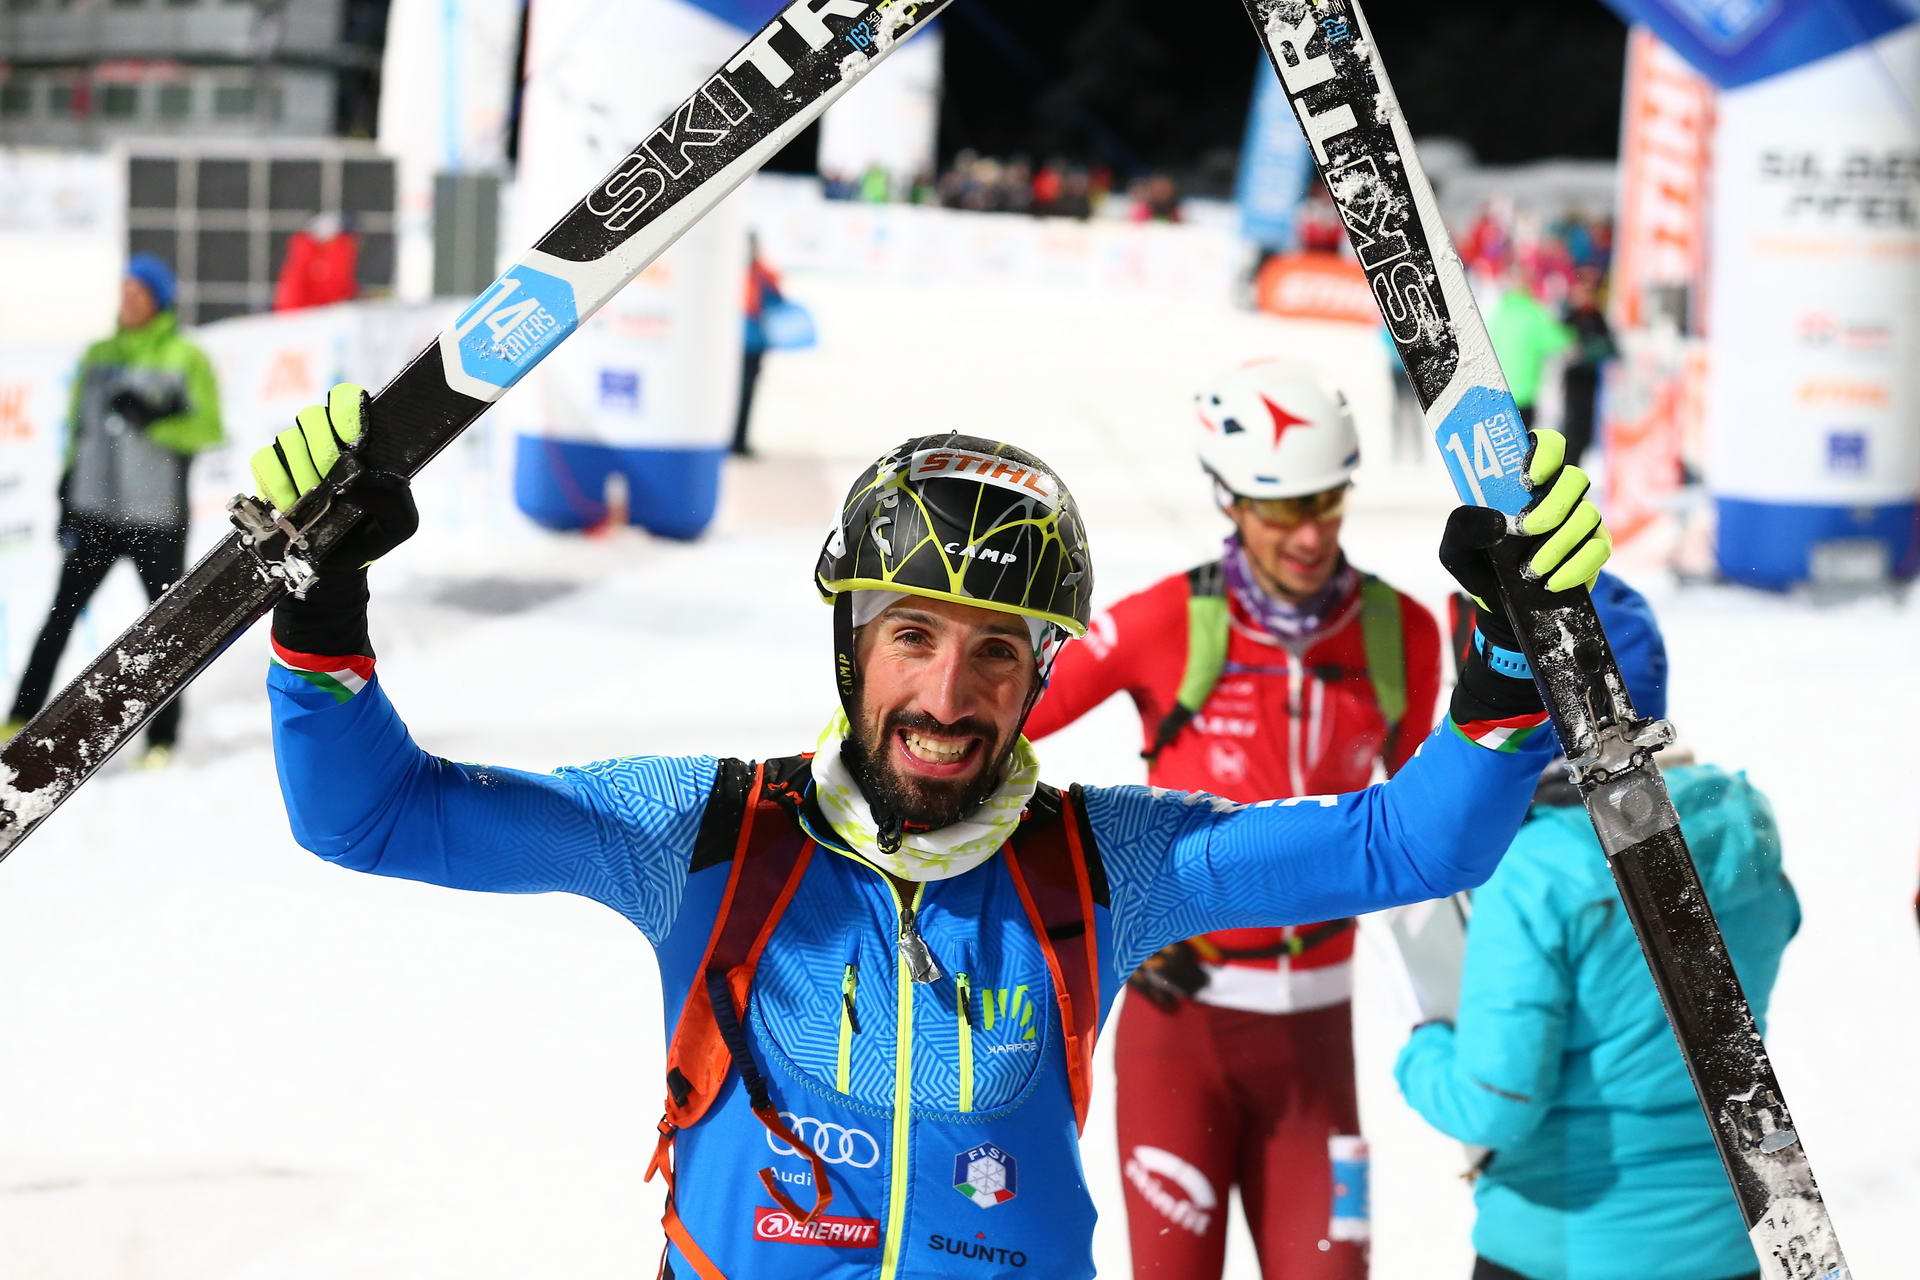 SALZBURG, AUSTRIA - JANUARY 18: Robert Antonioli of Italy takes the win during ISMF World Cup Sprint Race at Paul Ausserleitnerschanze on January 18, 2019 in Salzburg, Austria.